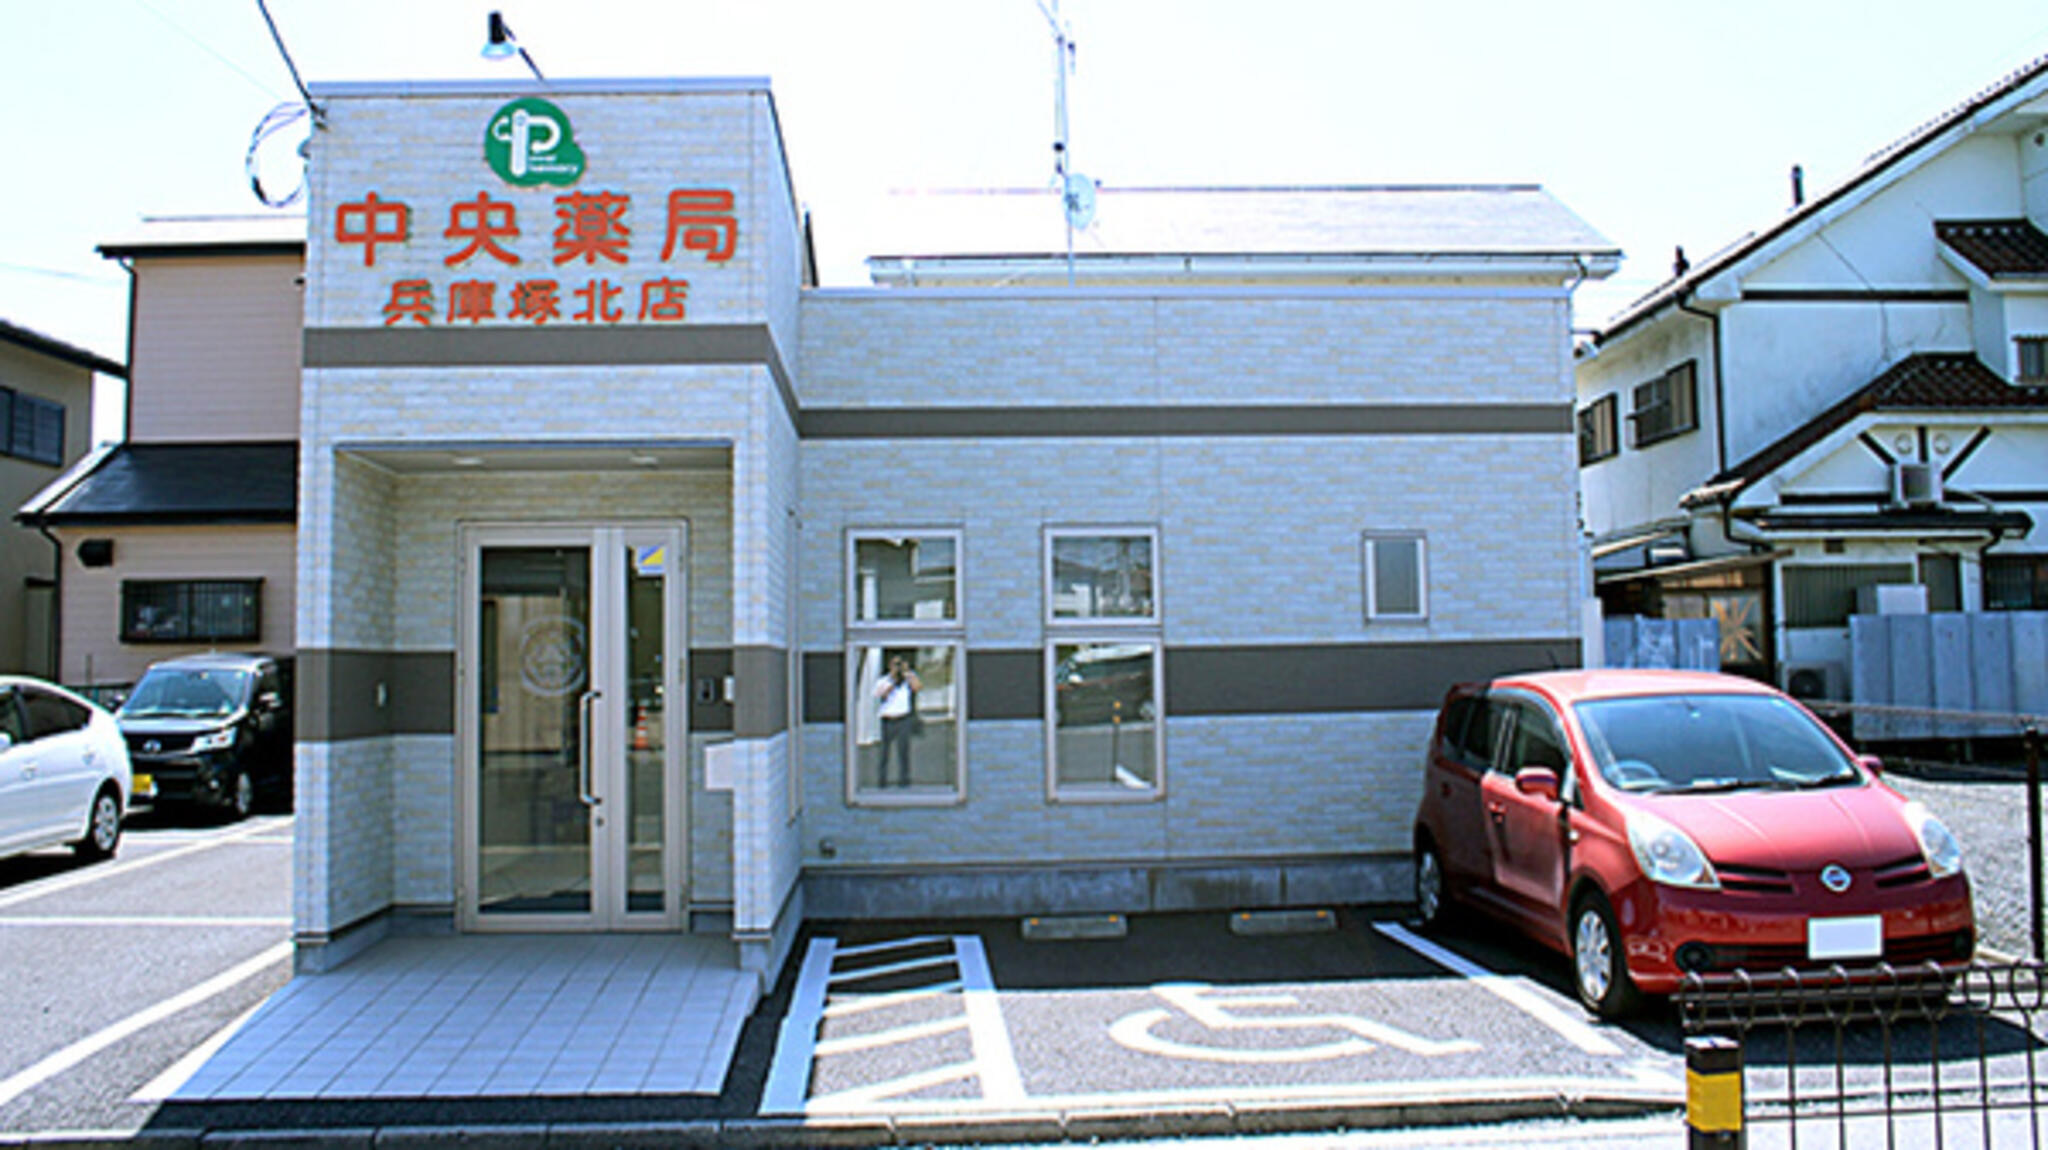 クオール薬局 中央薬局兵庫塚北店の代表写真1